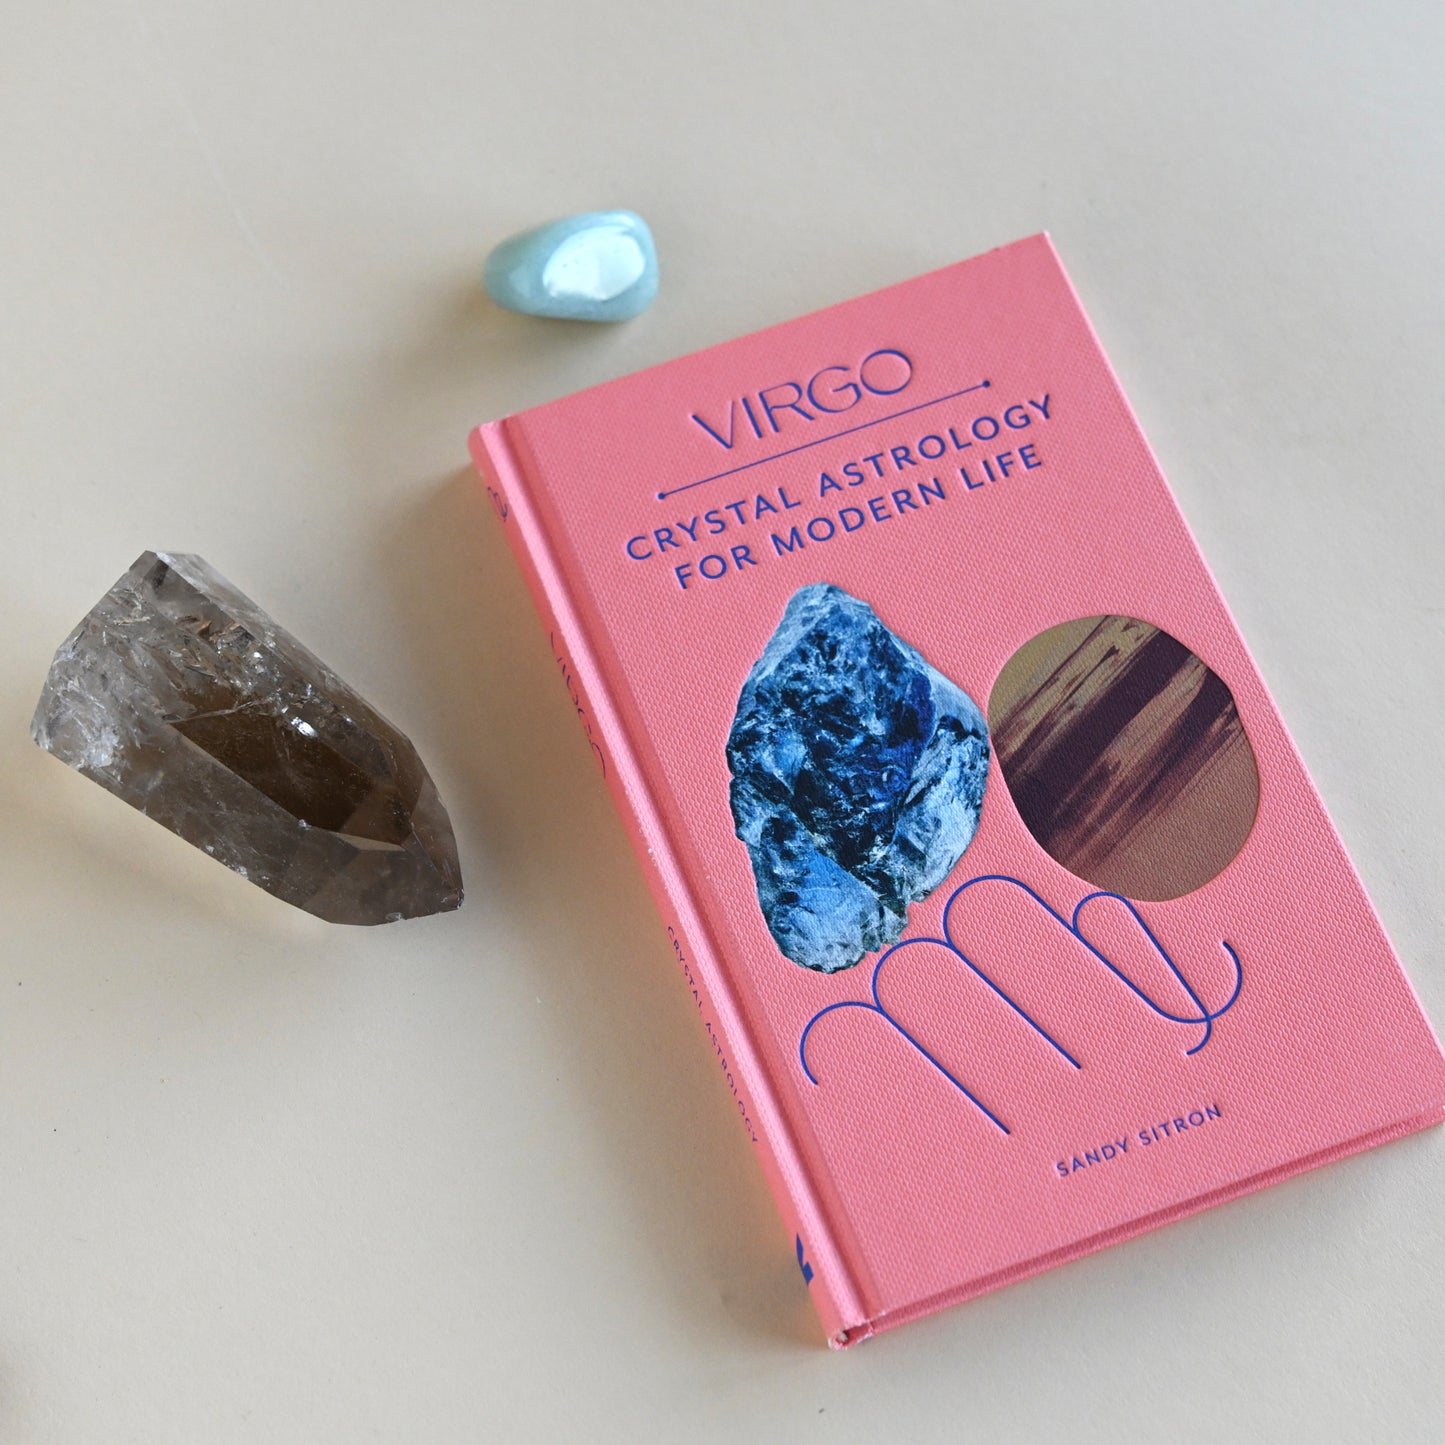 Virgo - Crystal Astrology for Modern Life